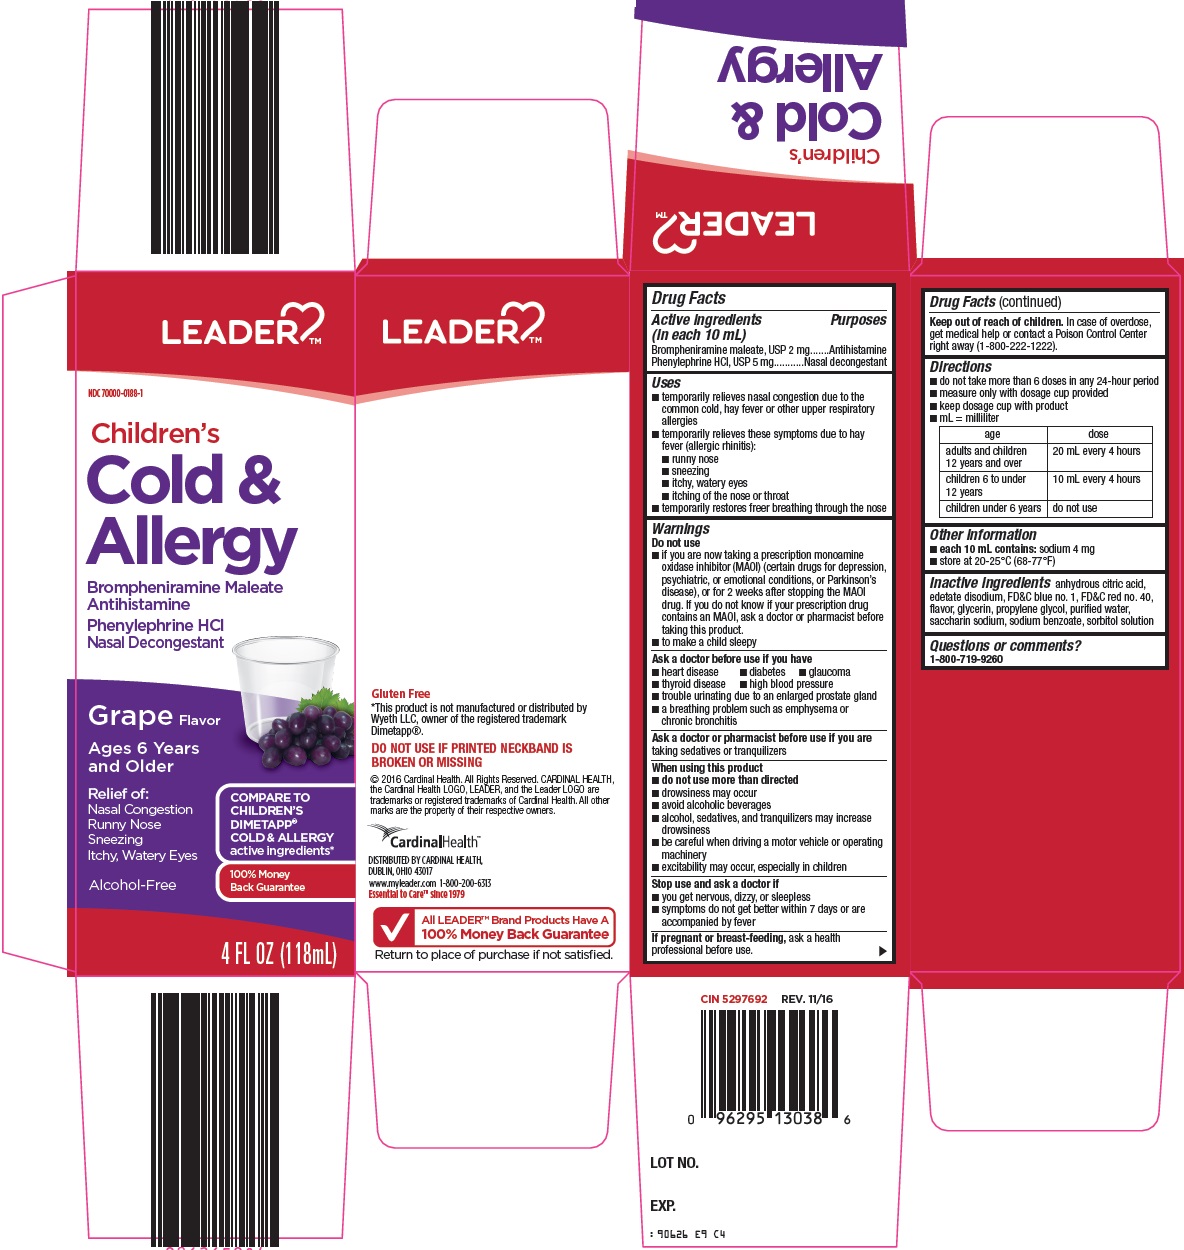 Leader Children's Cold & Allergy image